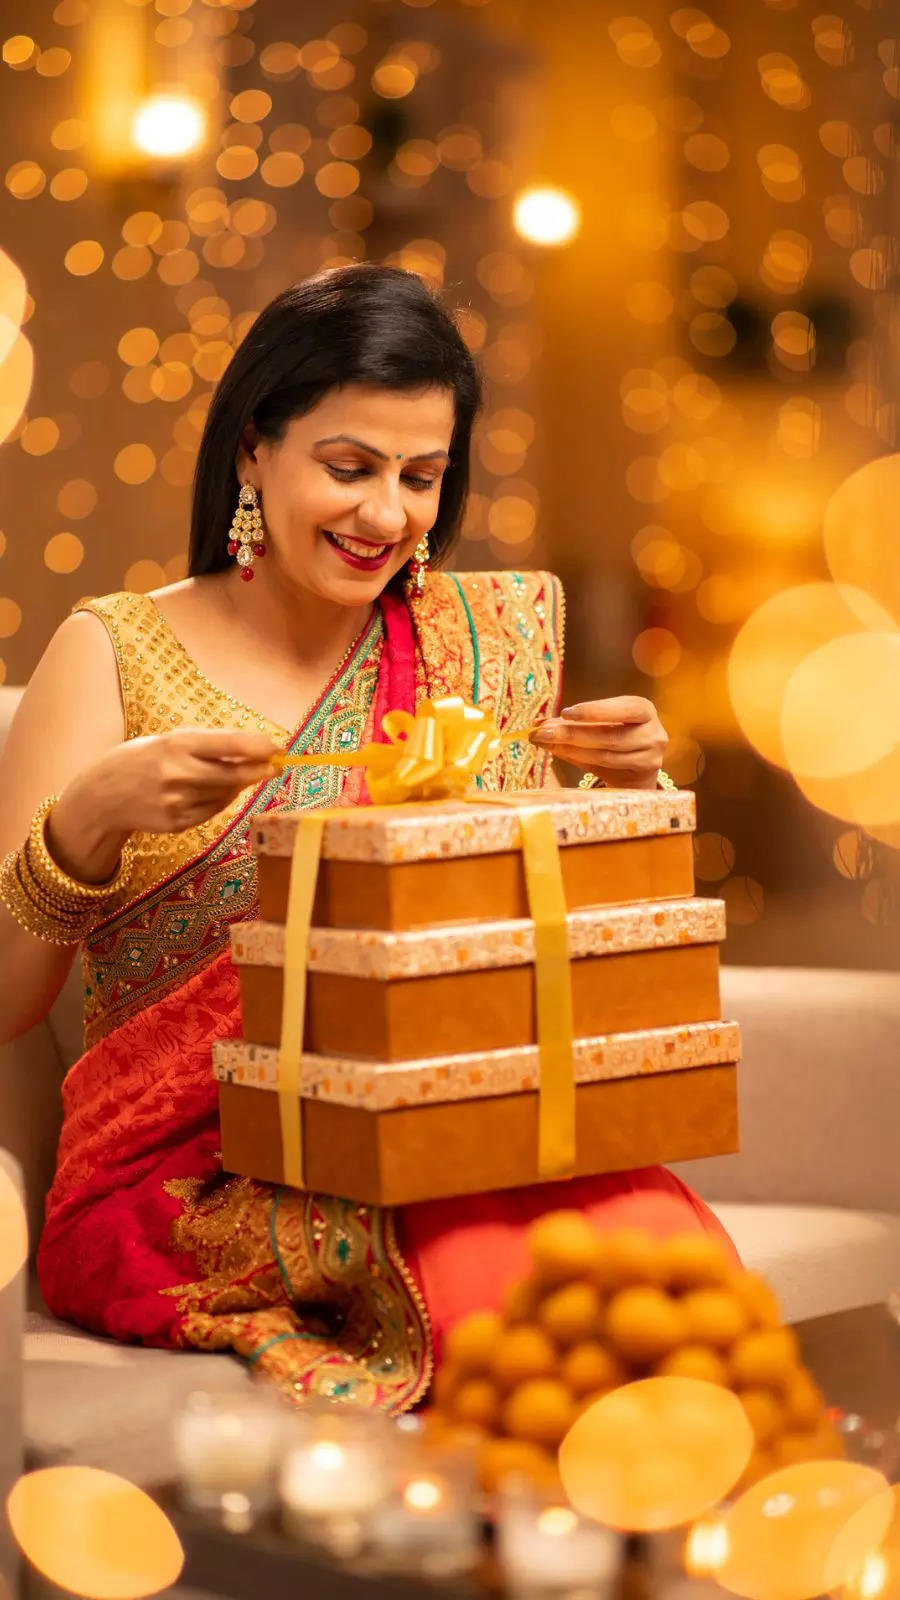 A Happy Family Celebrating Diwali · Free Stock Photo